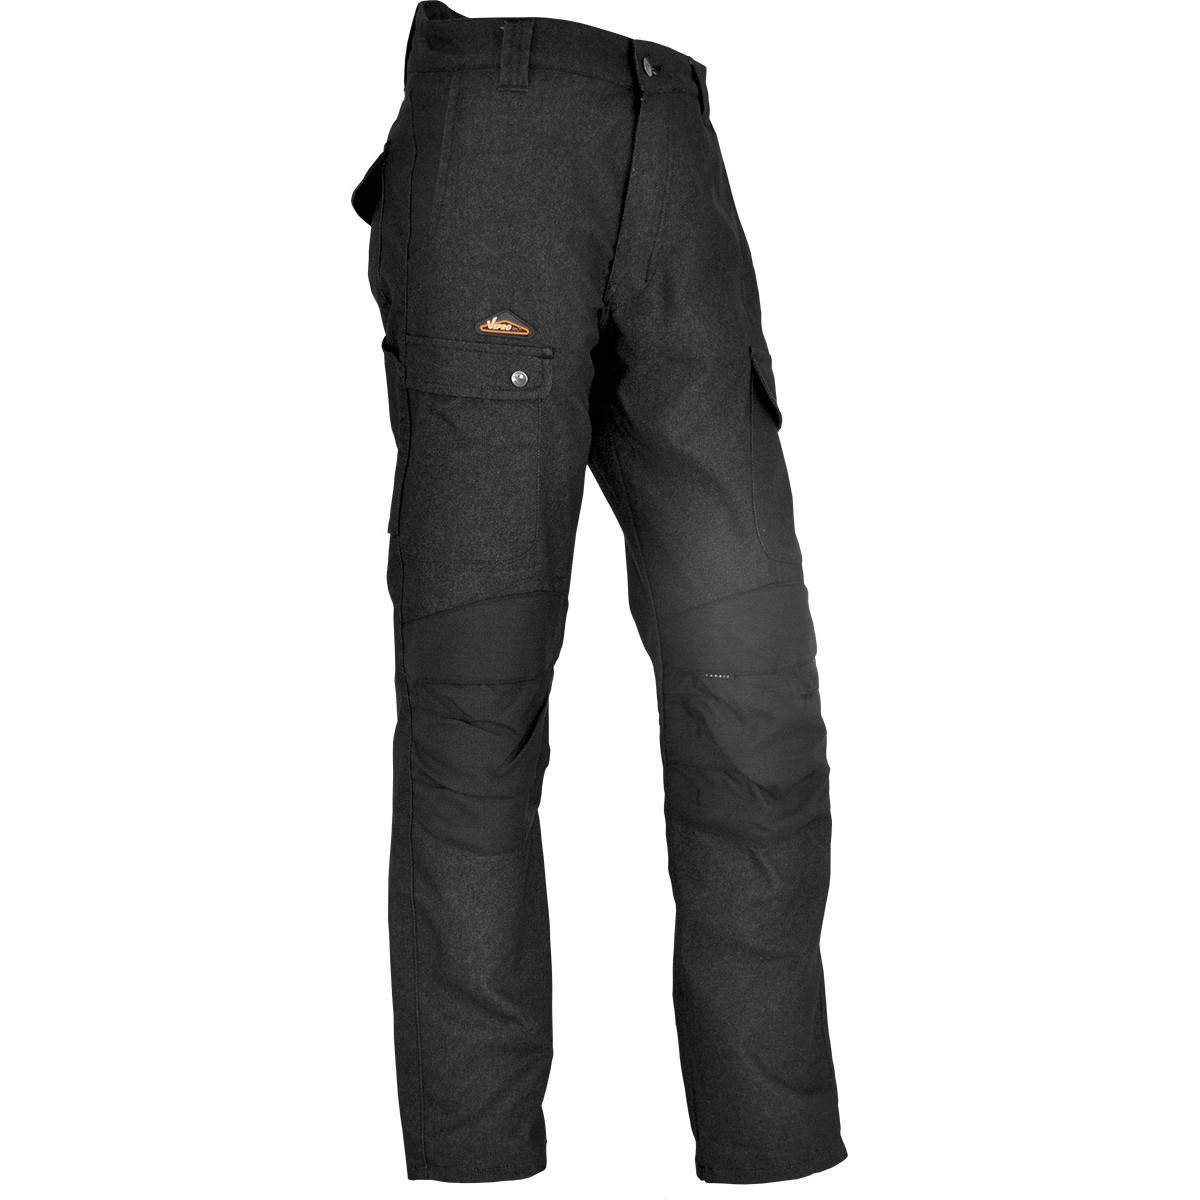 Pantalones de trabajo ENDU talla 46, negro